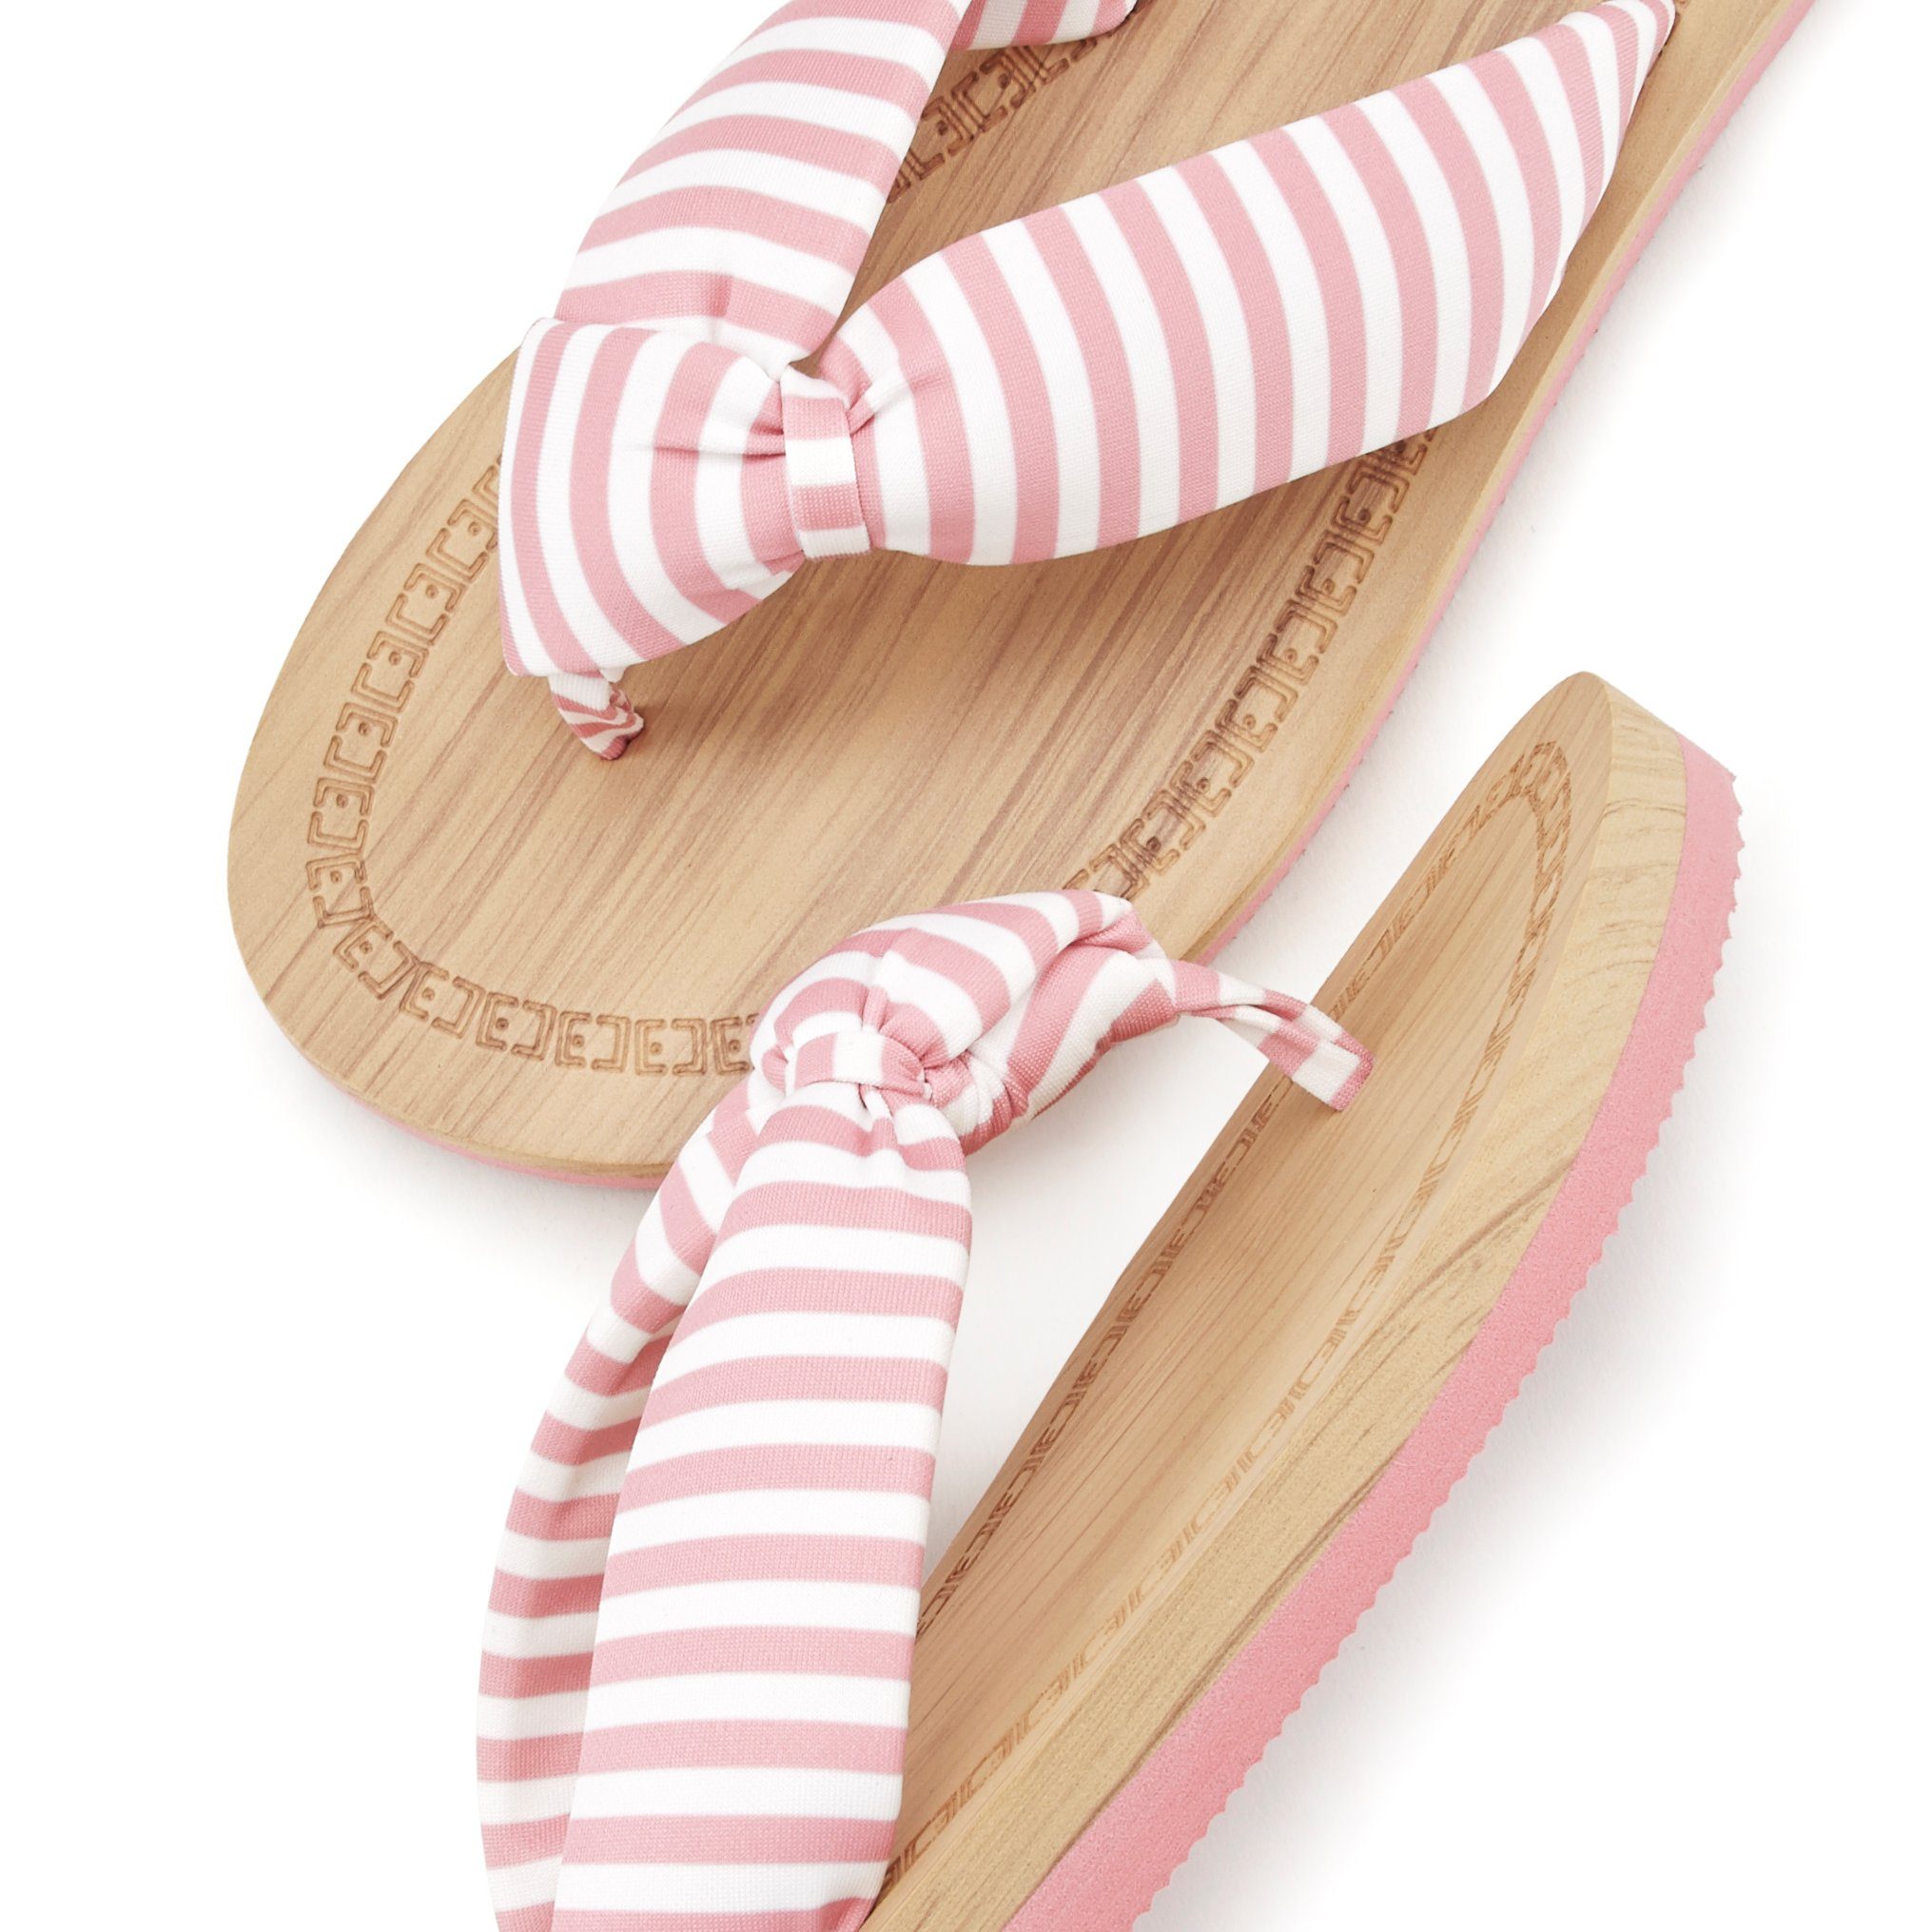 Elbsand Badezehentrenner Sandale, Pantolette, ultraleicht VEGAN rosa-gestreift Badeschuh